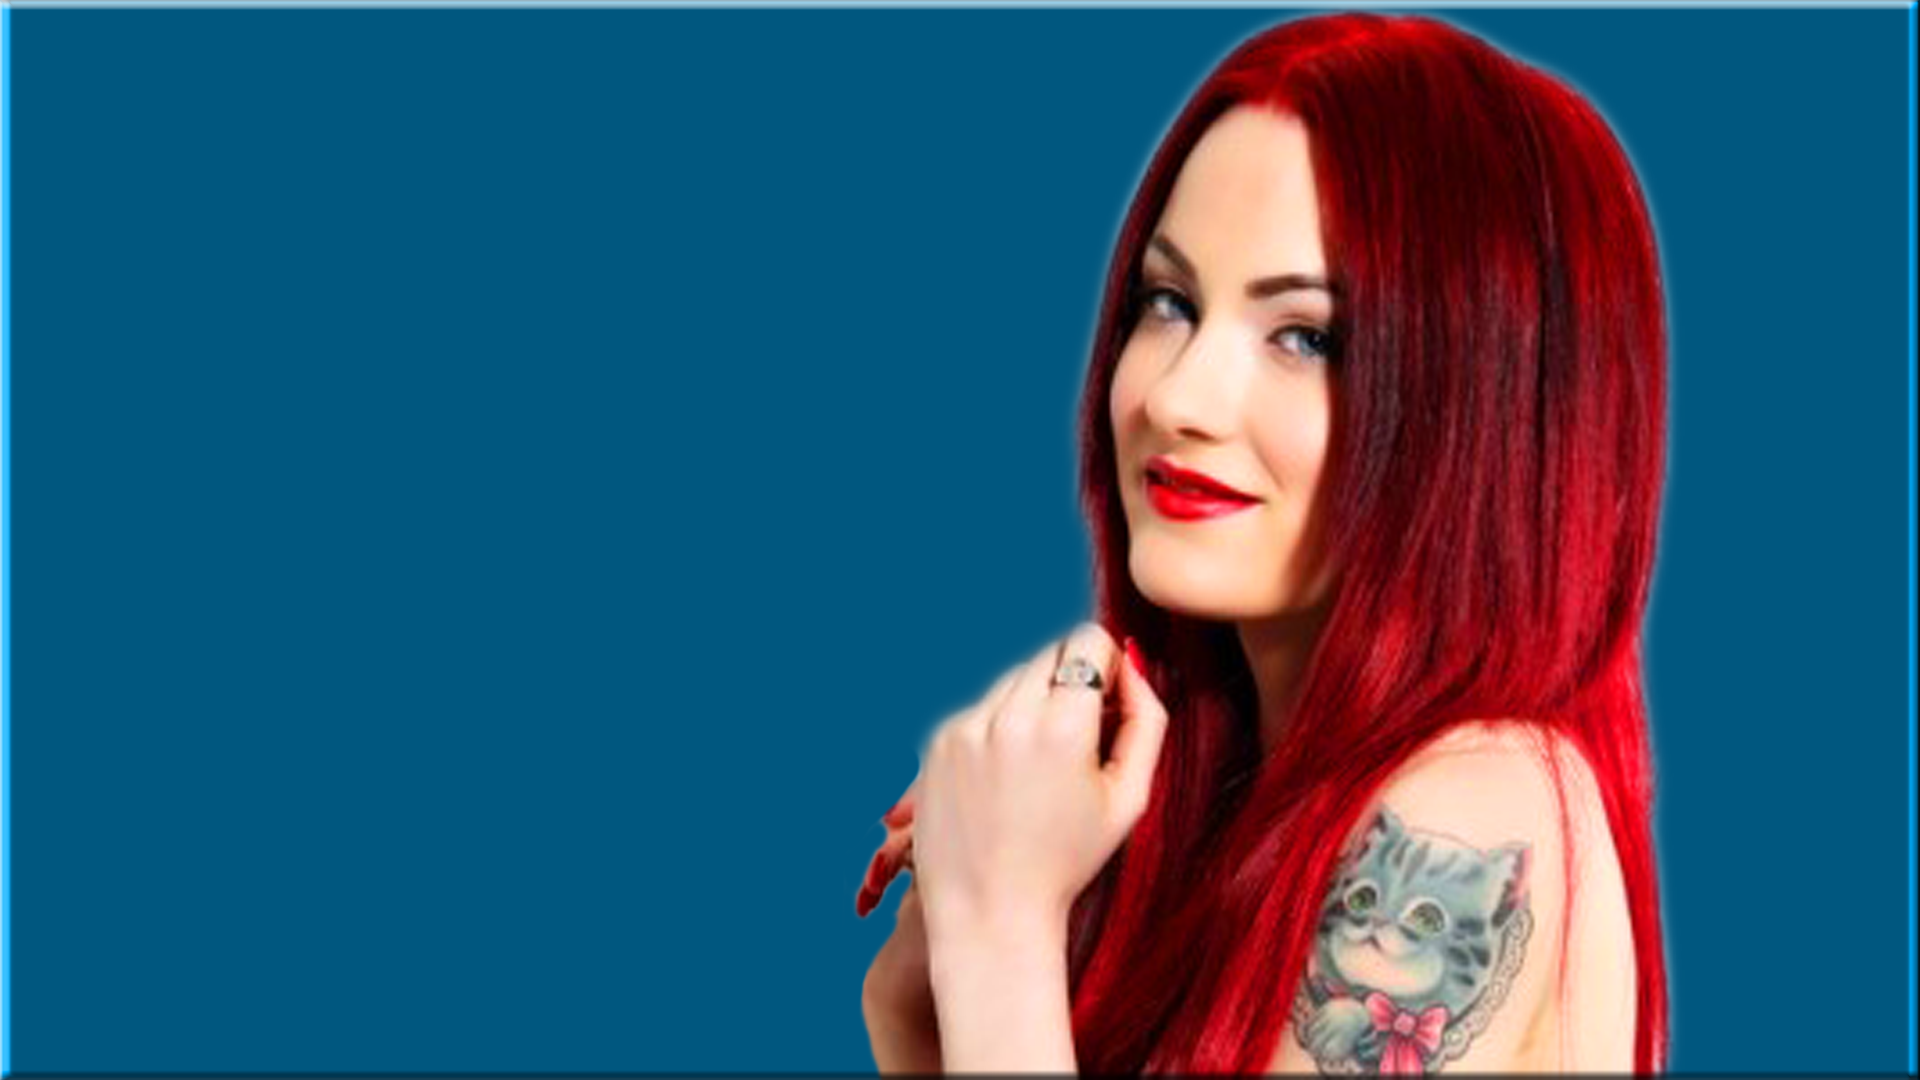 Tattooed Redhead Puter Wallpaper Desktop Background